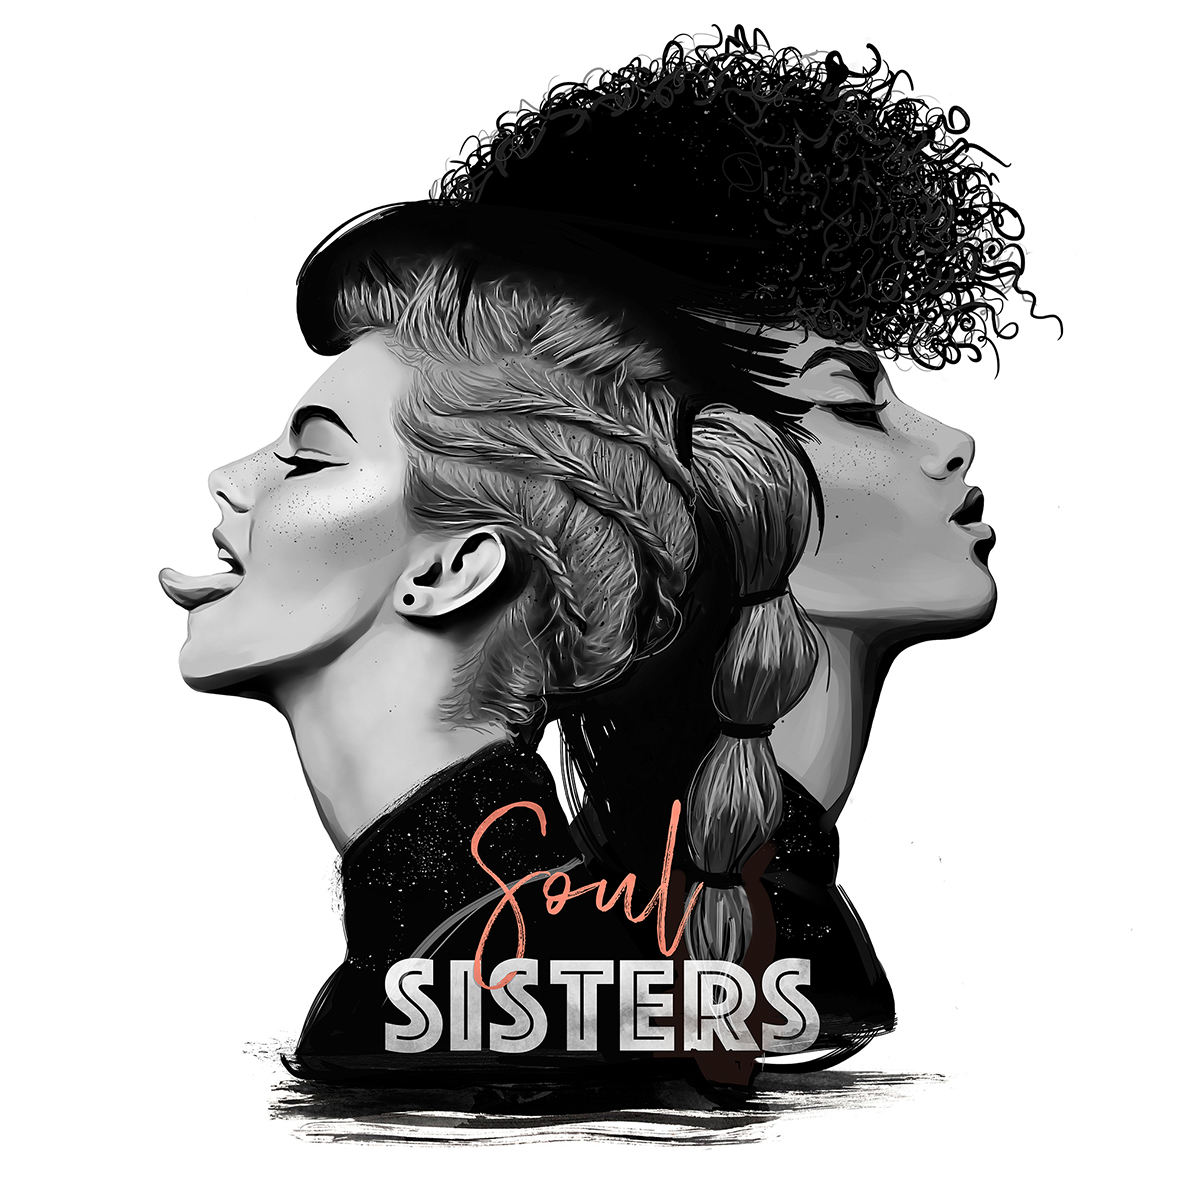 Soul sisters